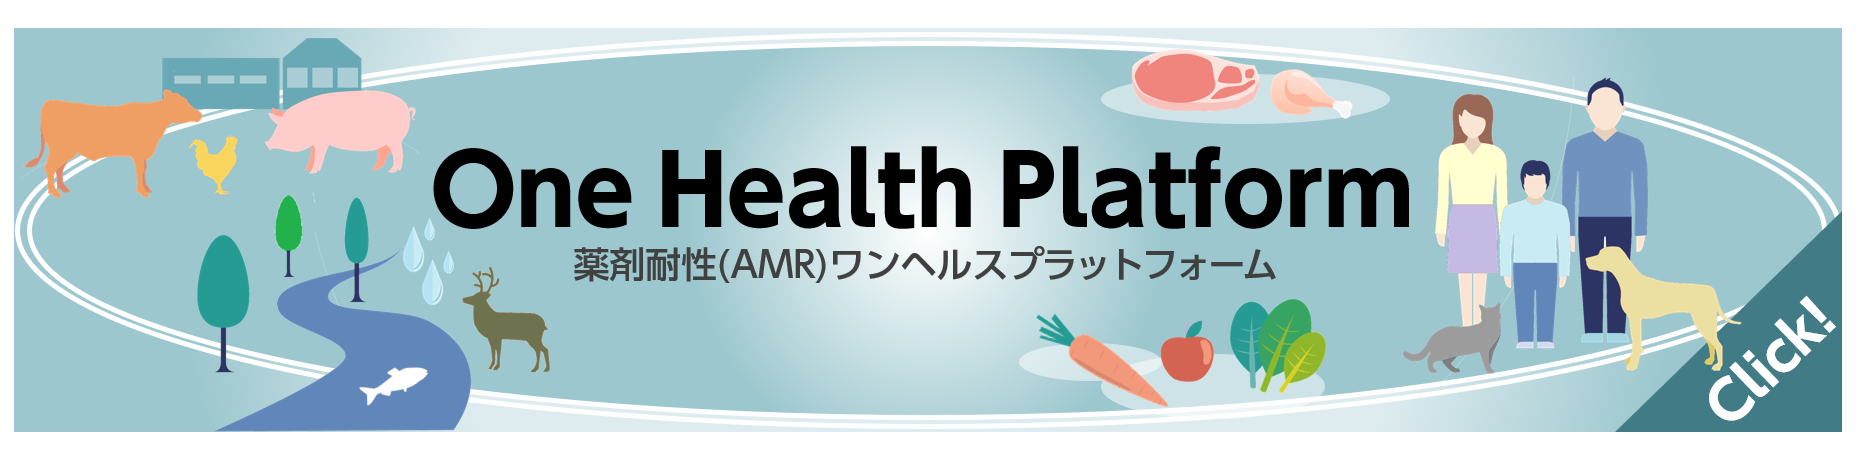 one health platformの画像